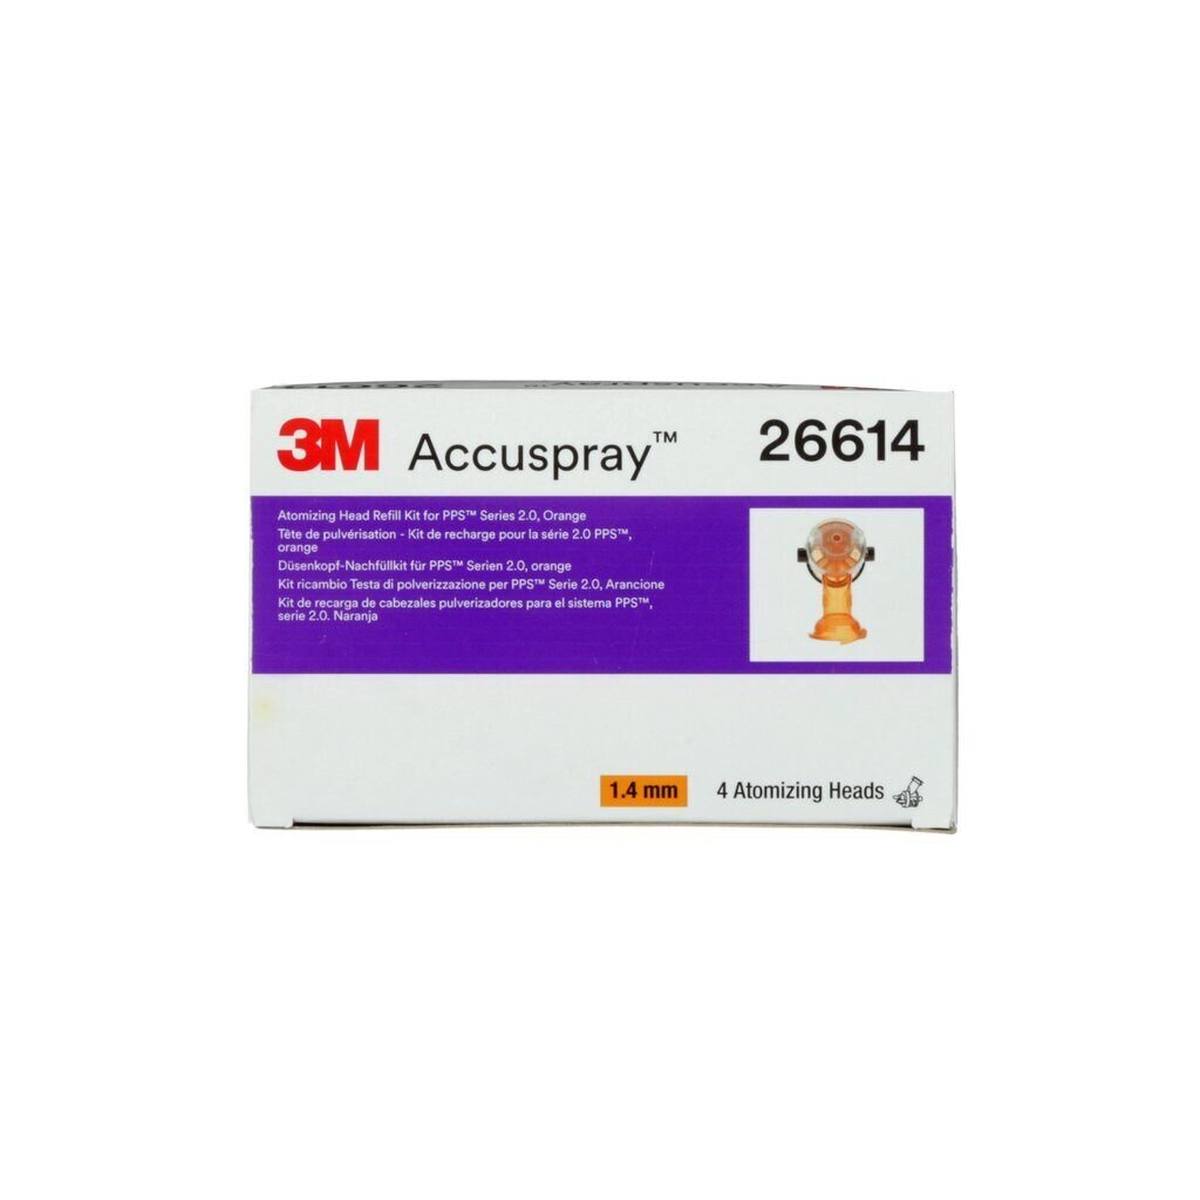 3M Accuspray cabezal de boquilla para PPS serie 2.0, 1.4 mm, naranja, 26614 (Pack=4pcs)